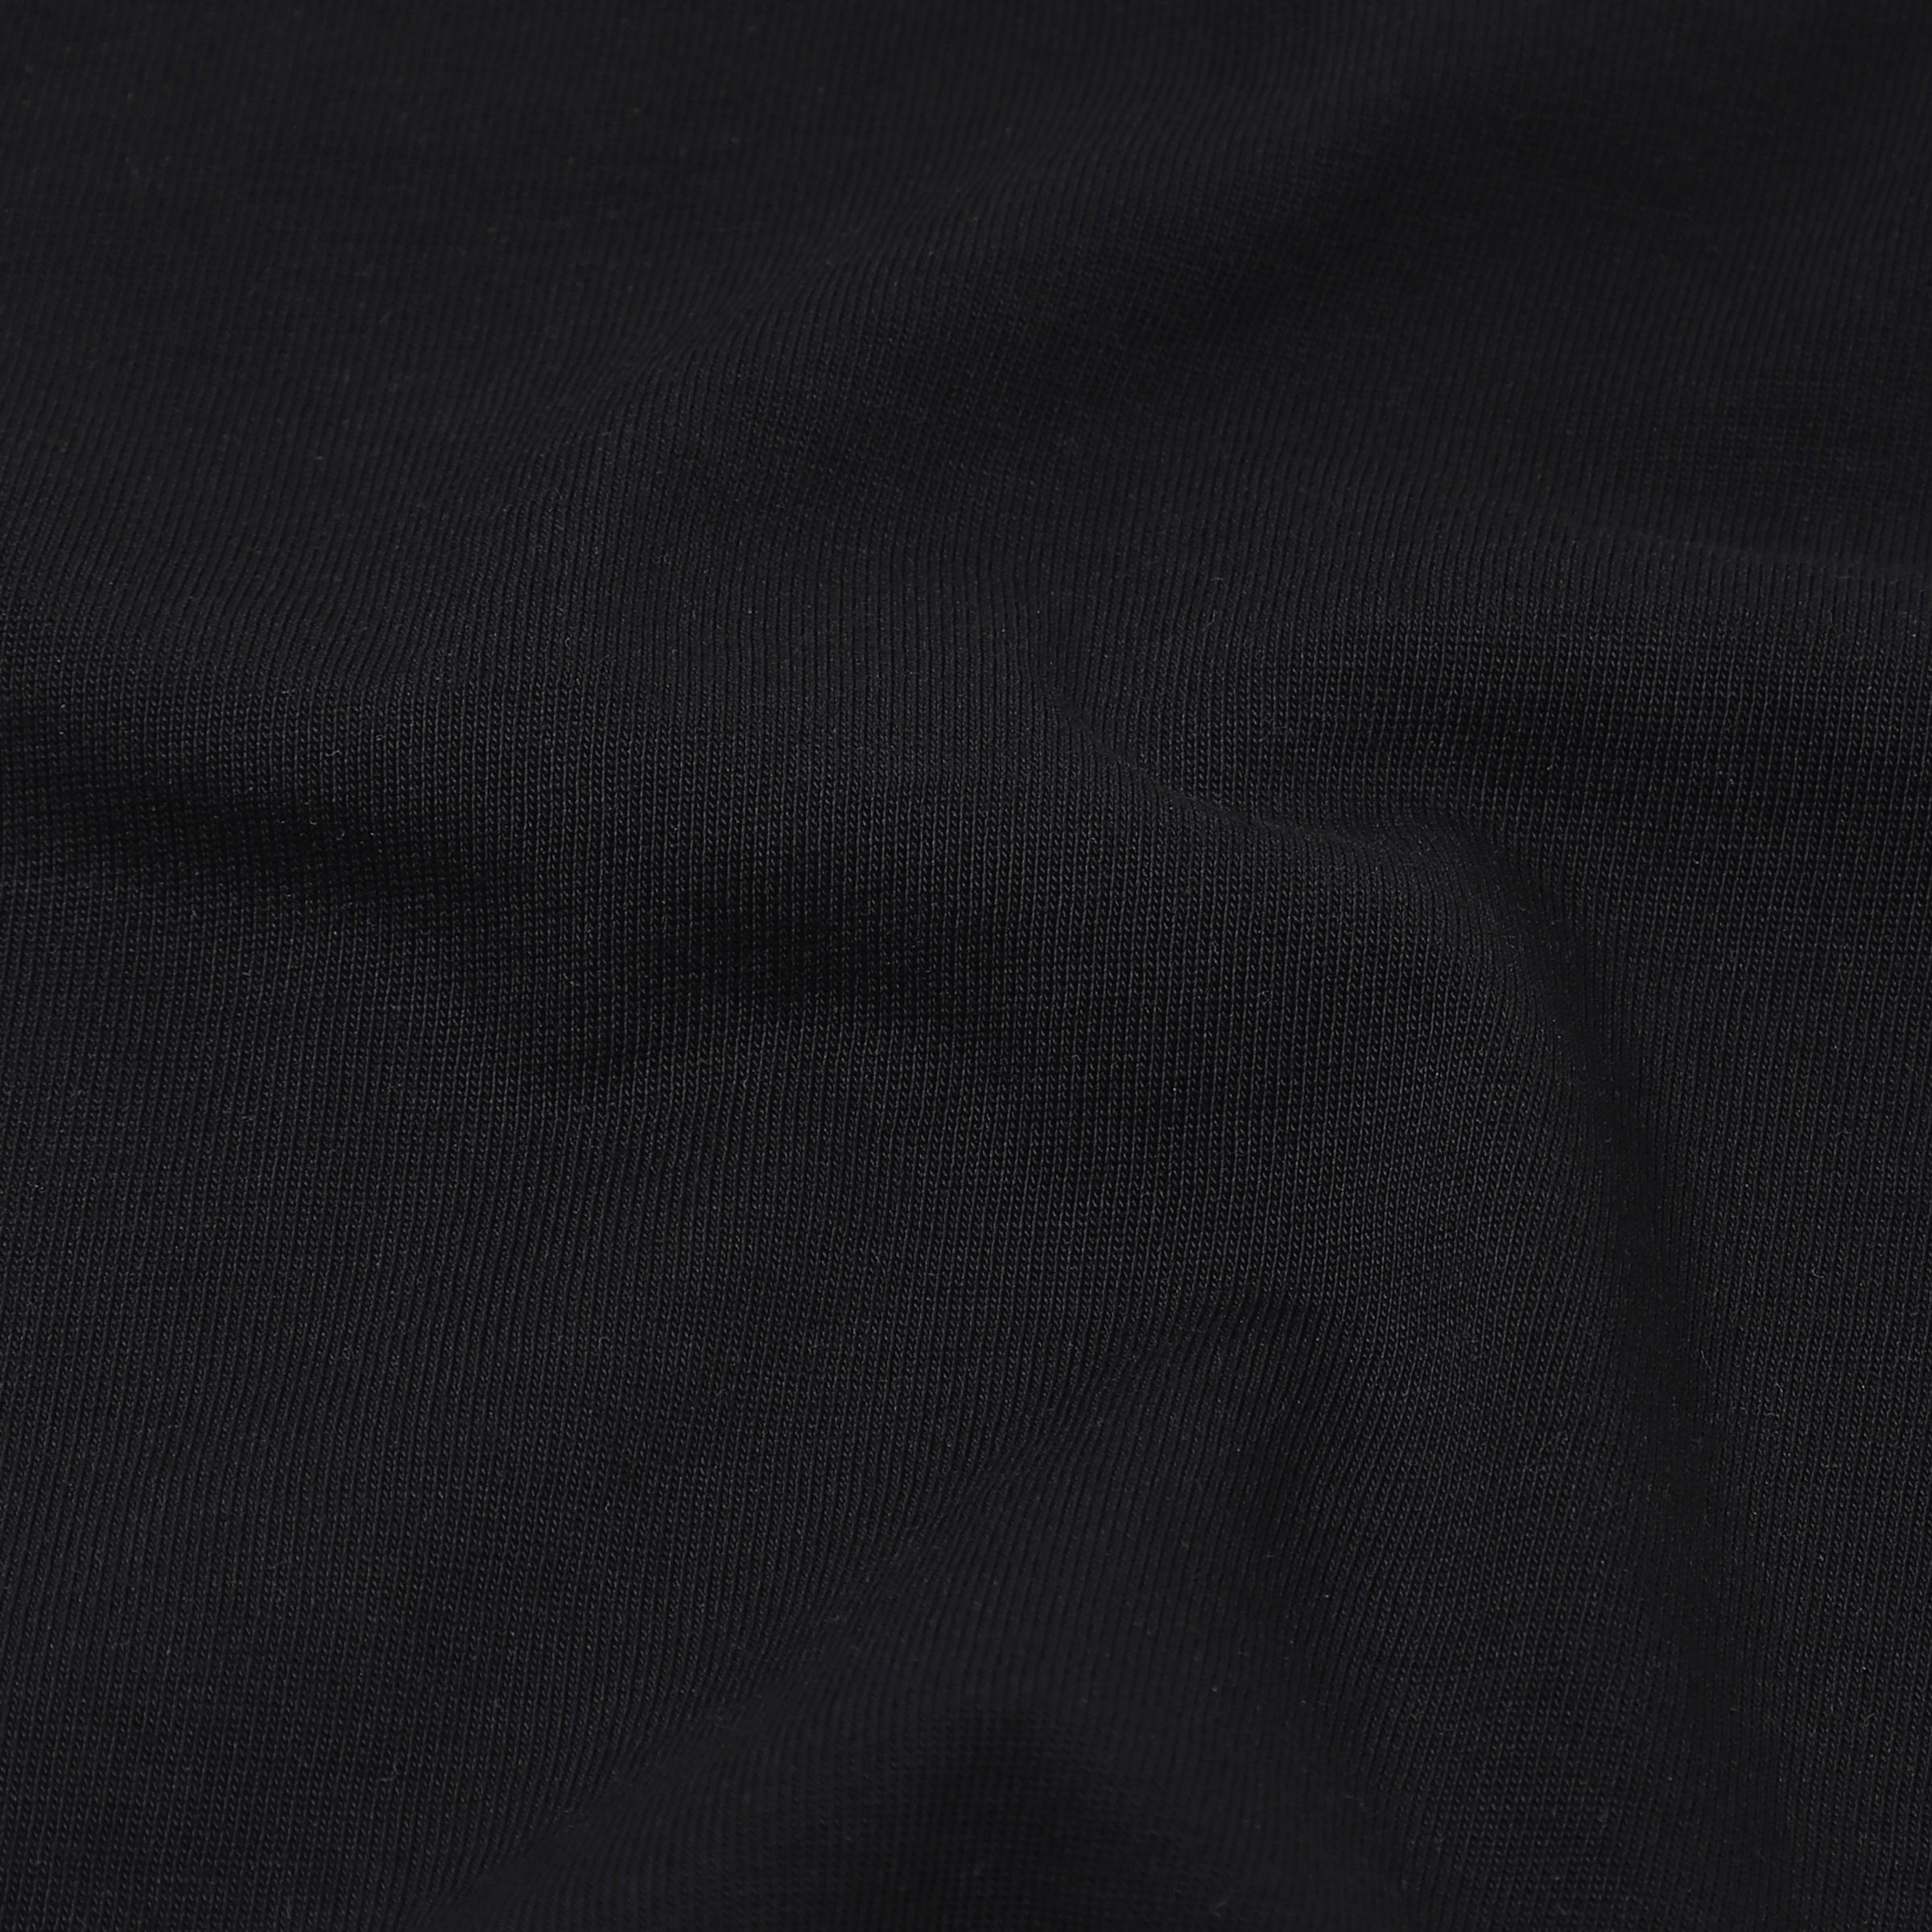 Supima Heavyweight Tee Black close up of fabric